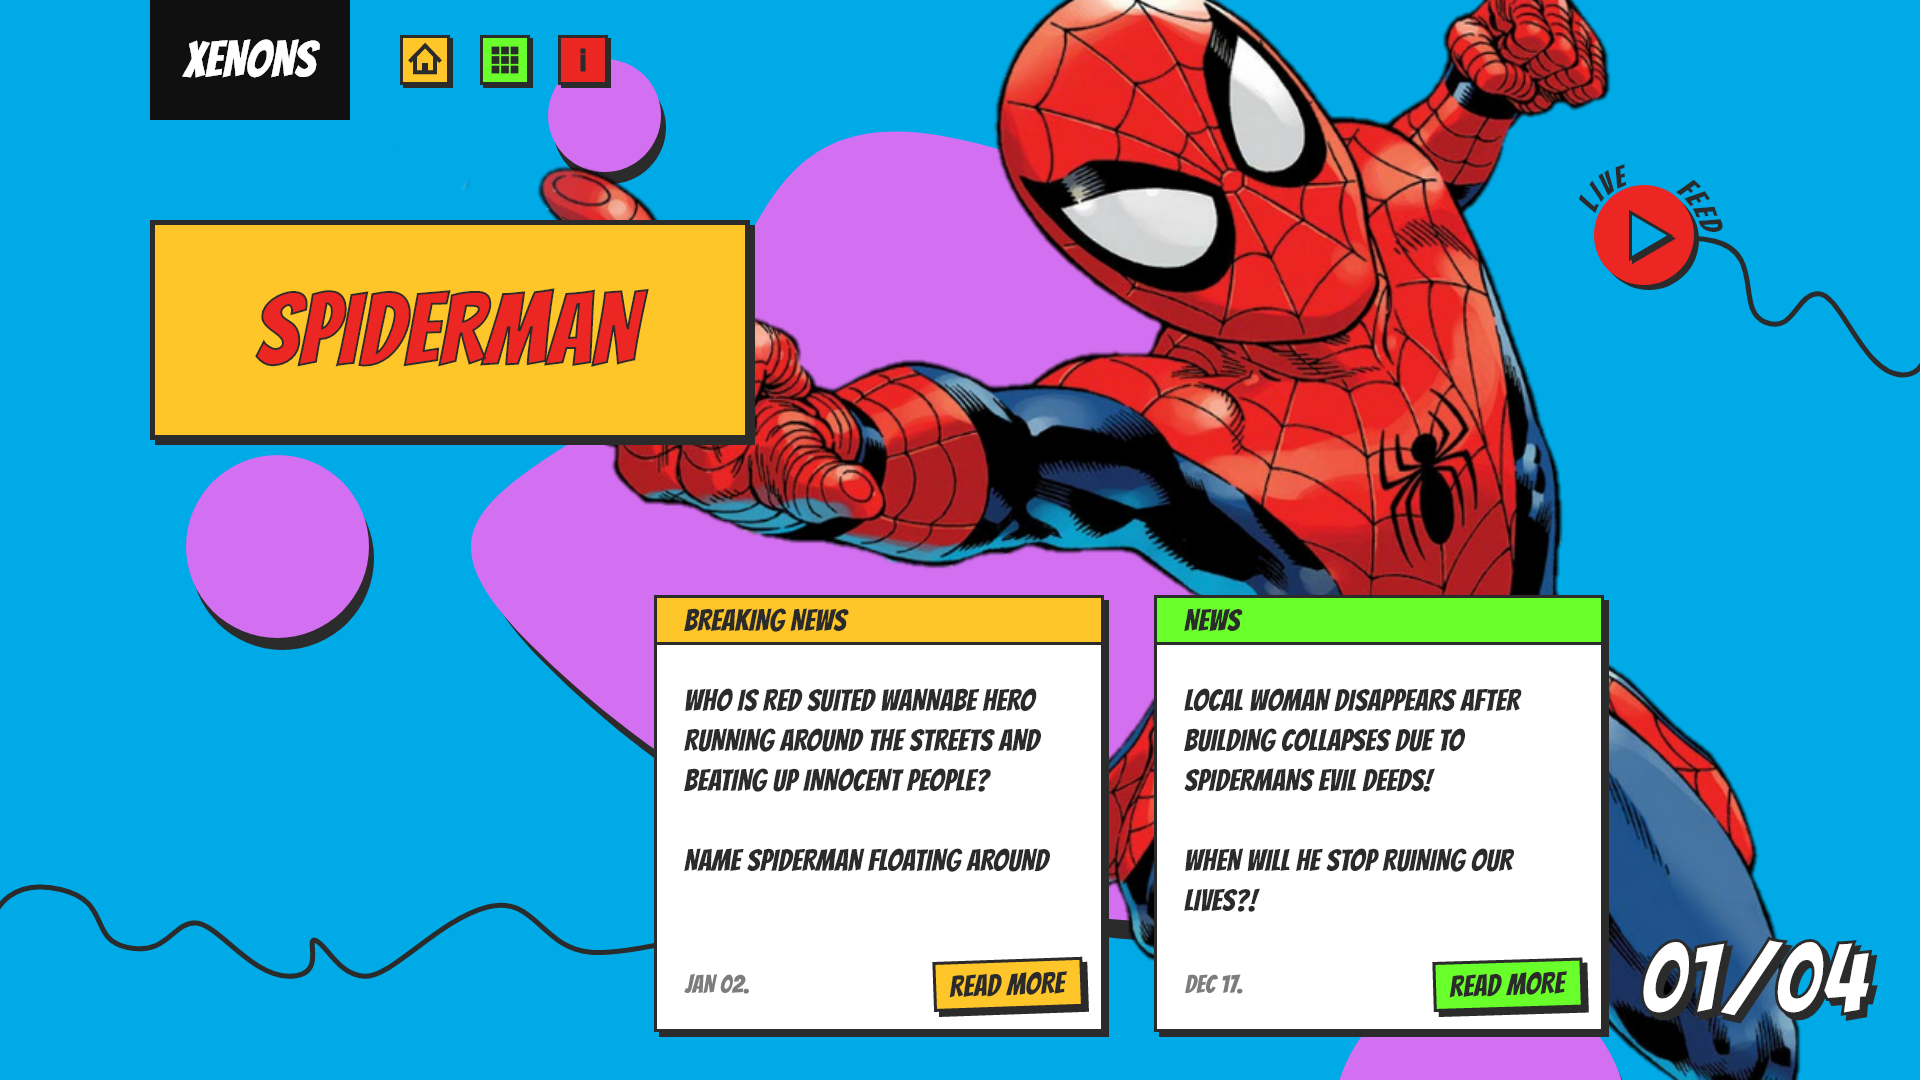 Spiderman site design on xenons.net